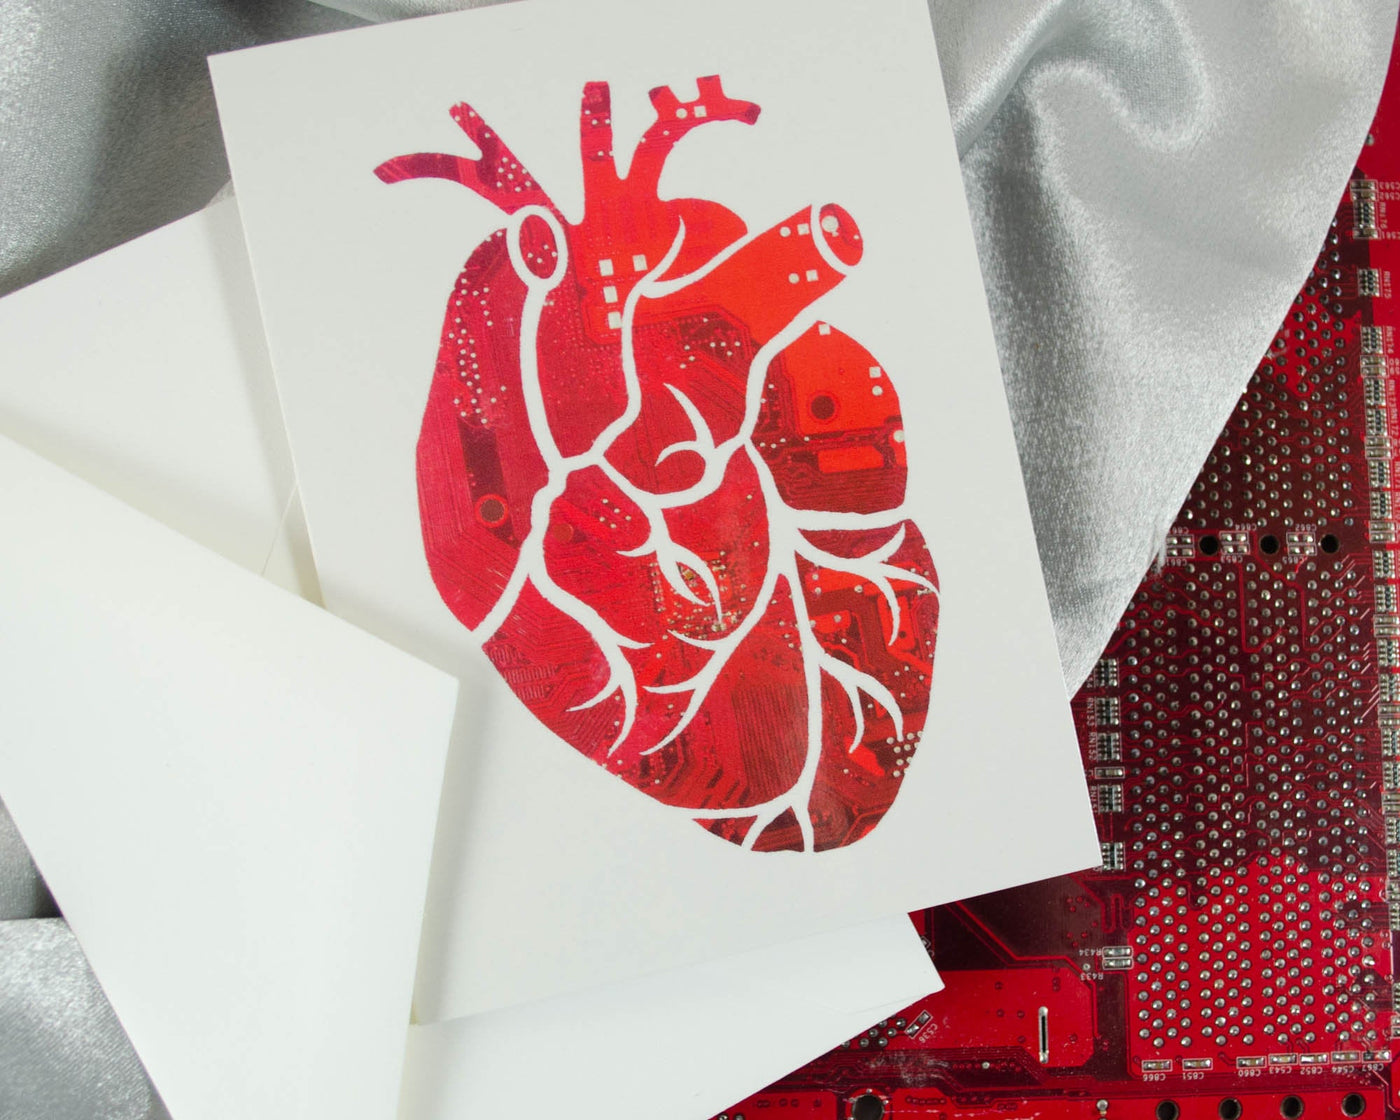 Anatomical Heart Greeting Card